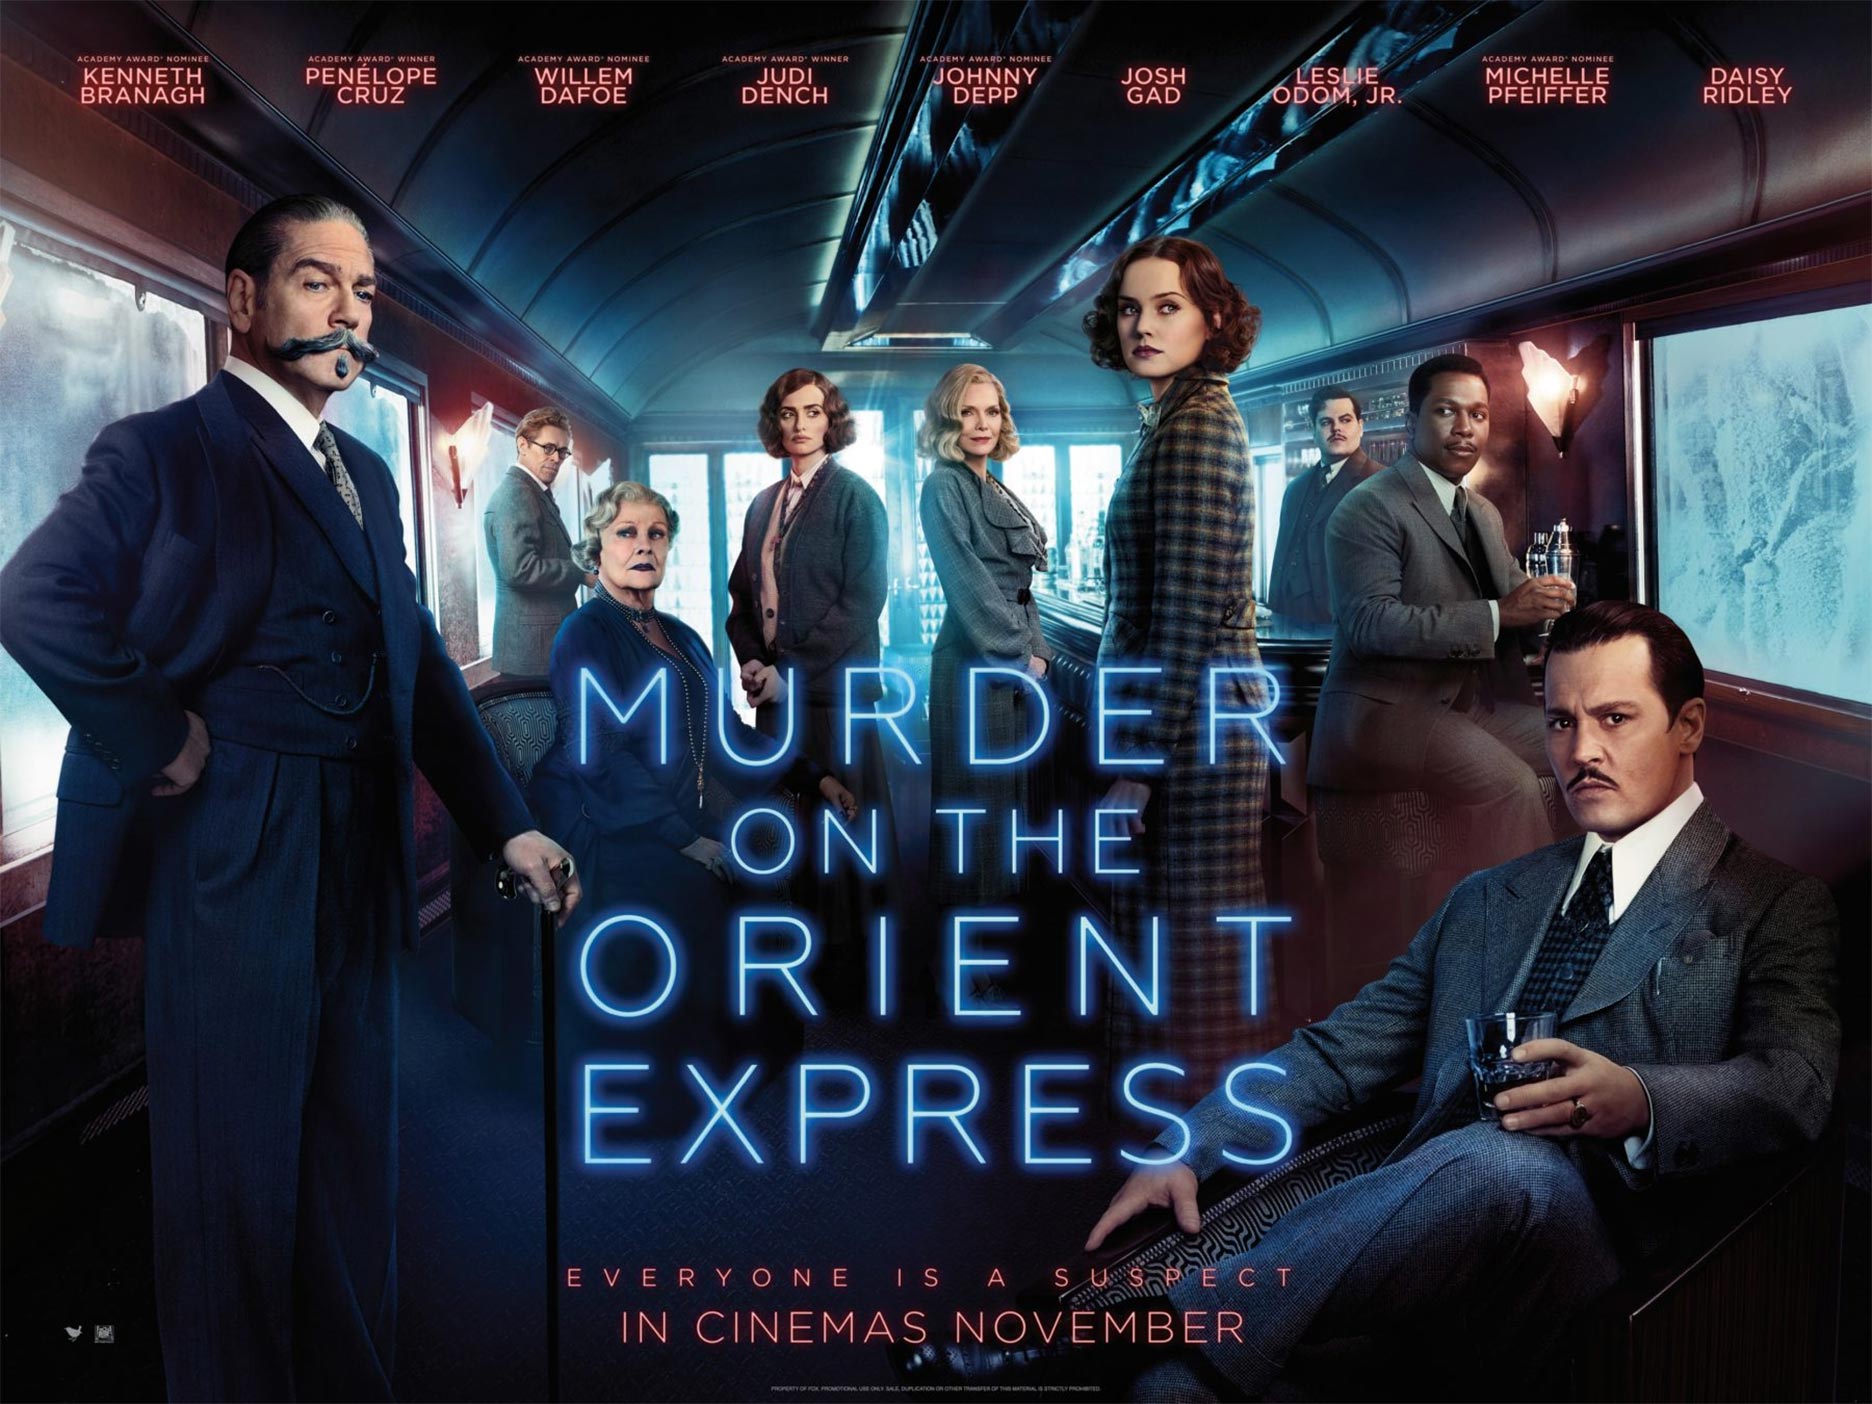 Murder on the Orient Express (2017) Movie Poster Google image from https://www.traileraddict.com/murder-on-the-orient-express/poster/3